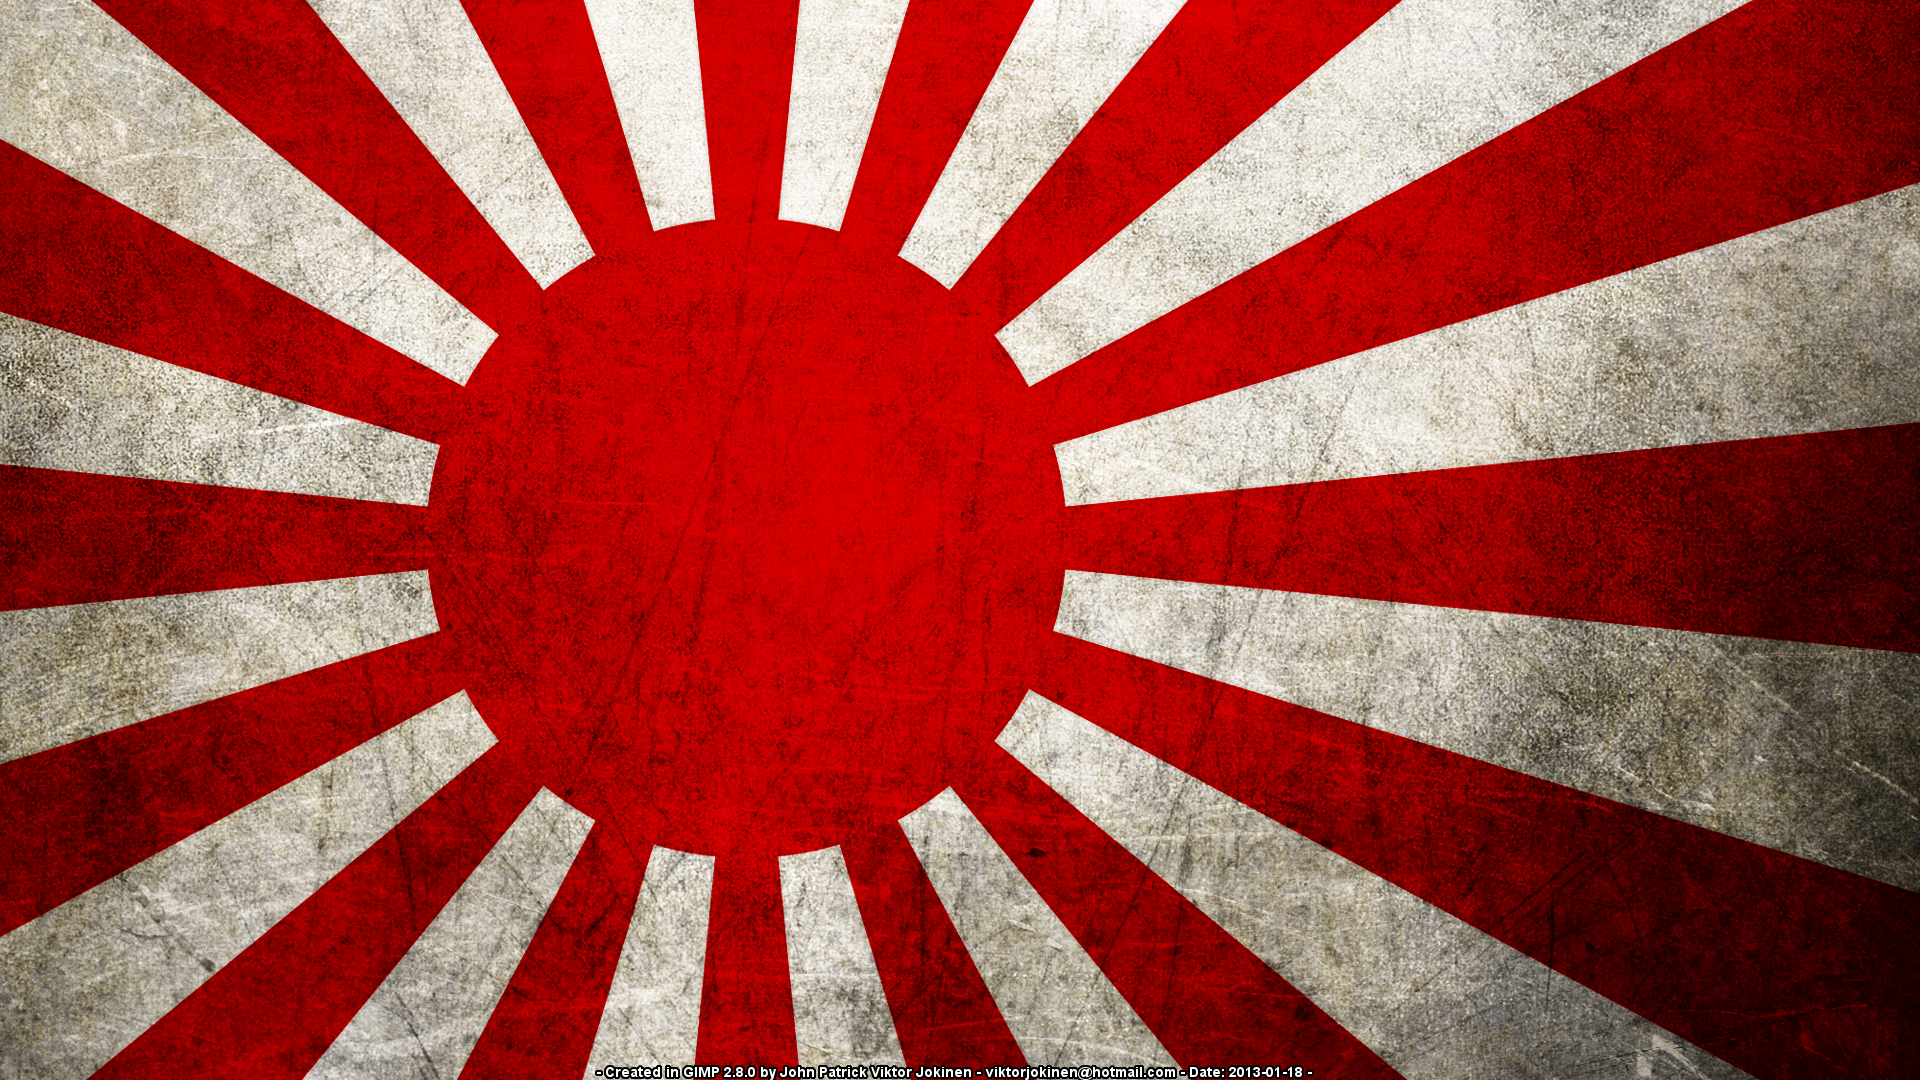 Japan Flag Wallpapers Desktop 1920x1080 px WallpapersExpertcom